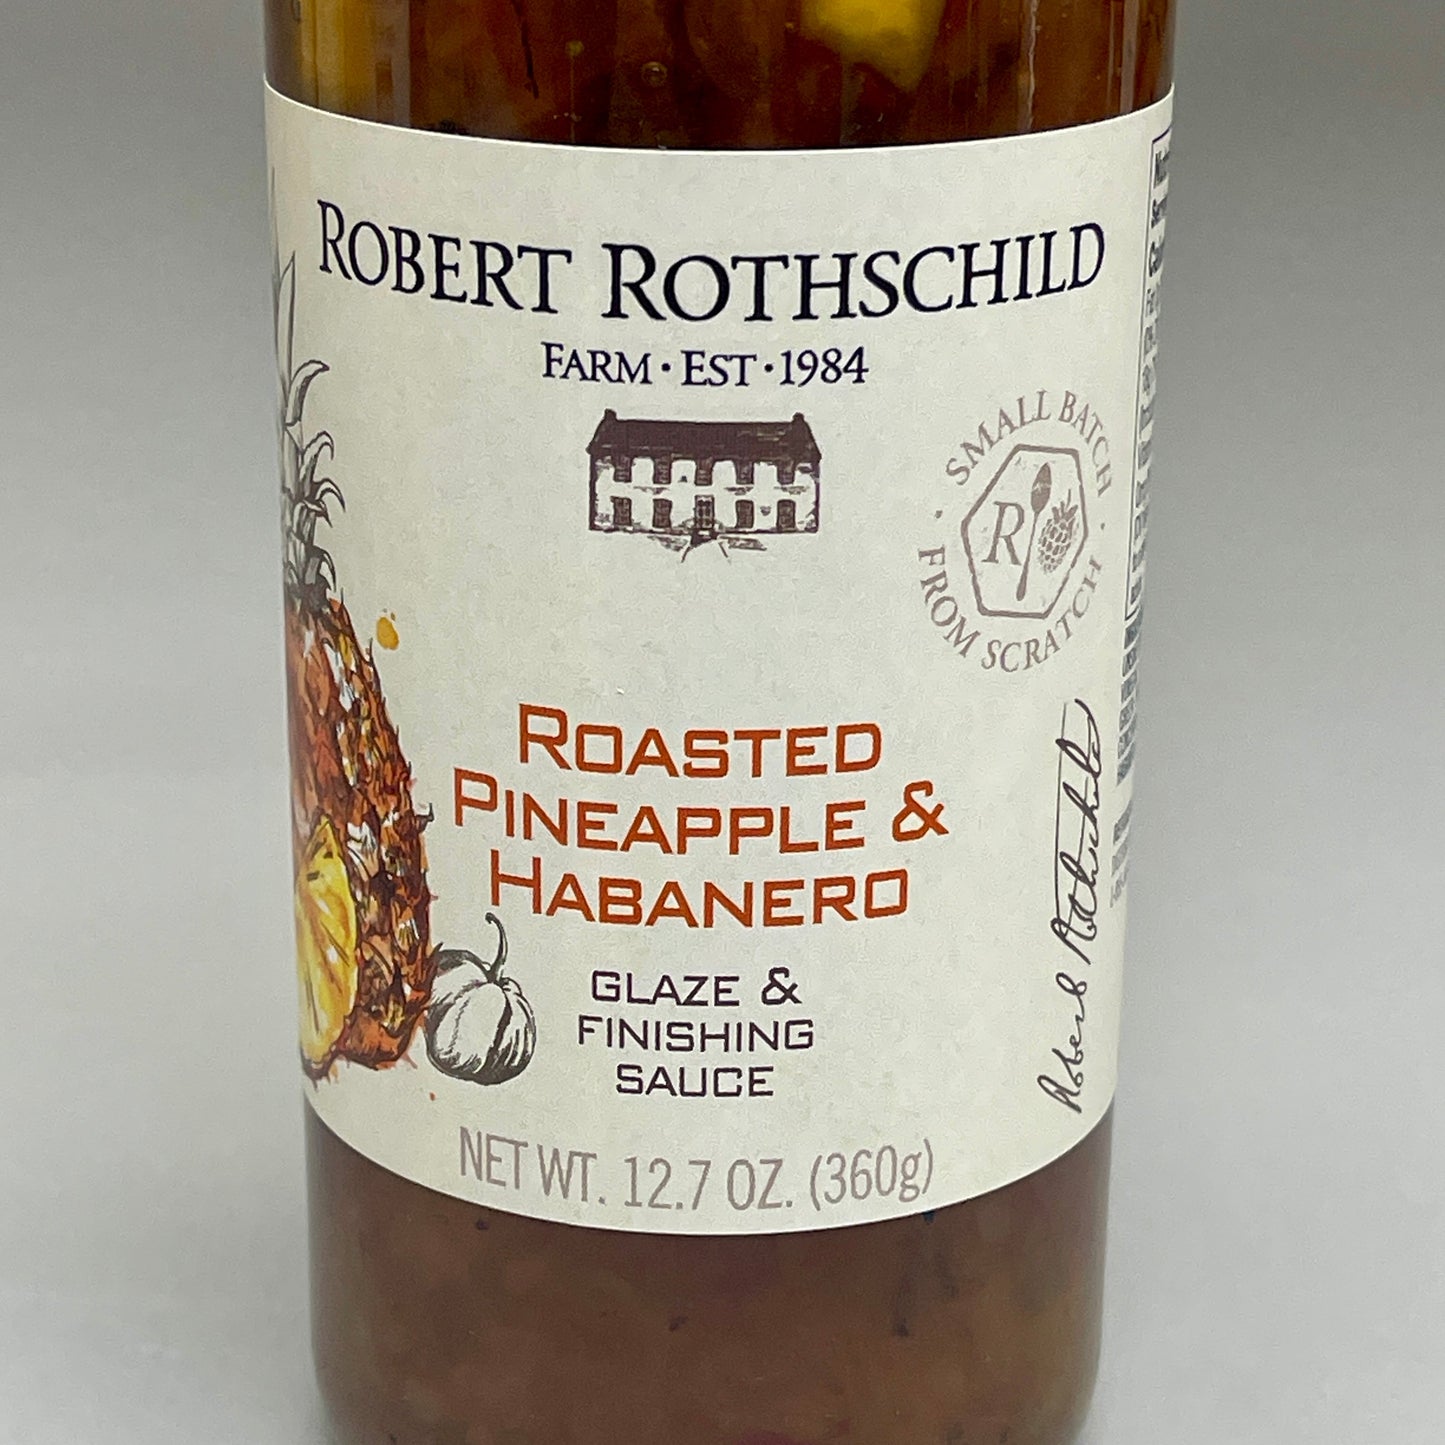 ZA@ ROBERT ROTHSCHILD 6-PK of Roasted Pineapple & Habanero Glaze & Finishing Sauce 12.7 oz 03/24 C